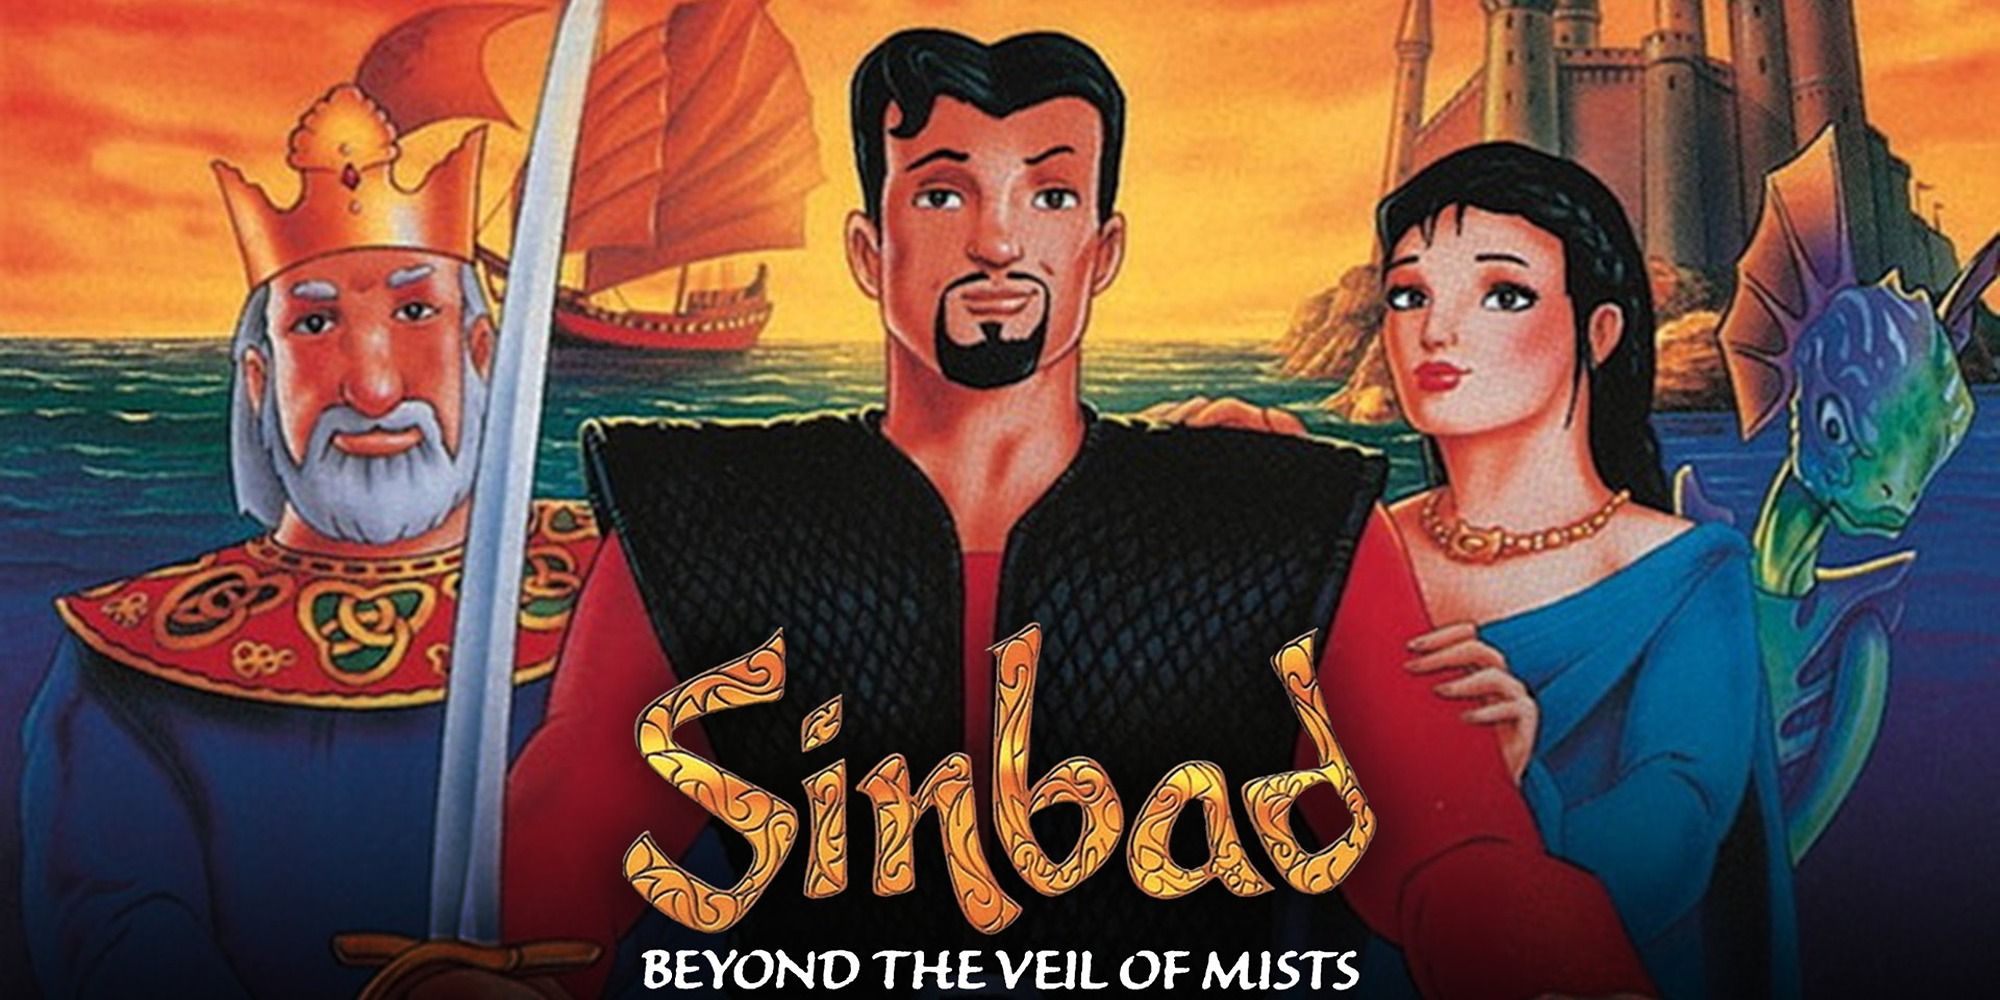 Brendan Fraser as Sinbad, John Rhys-Davies as King Chandra, Jennifer Hale as Princess Serena in Sinbad Beyond the Veil of Mists